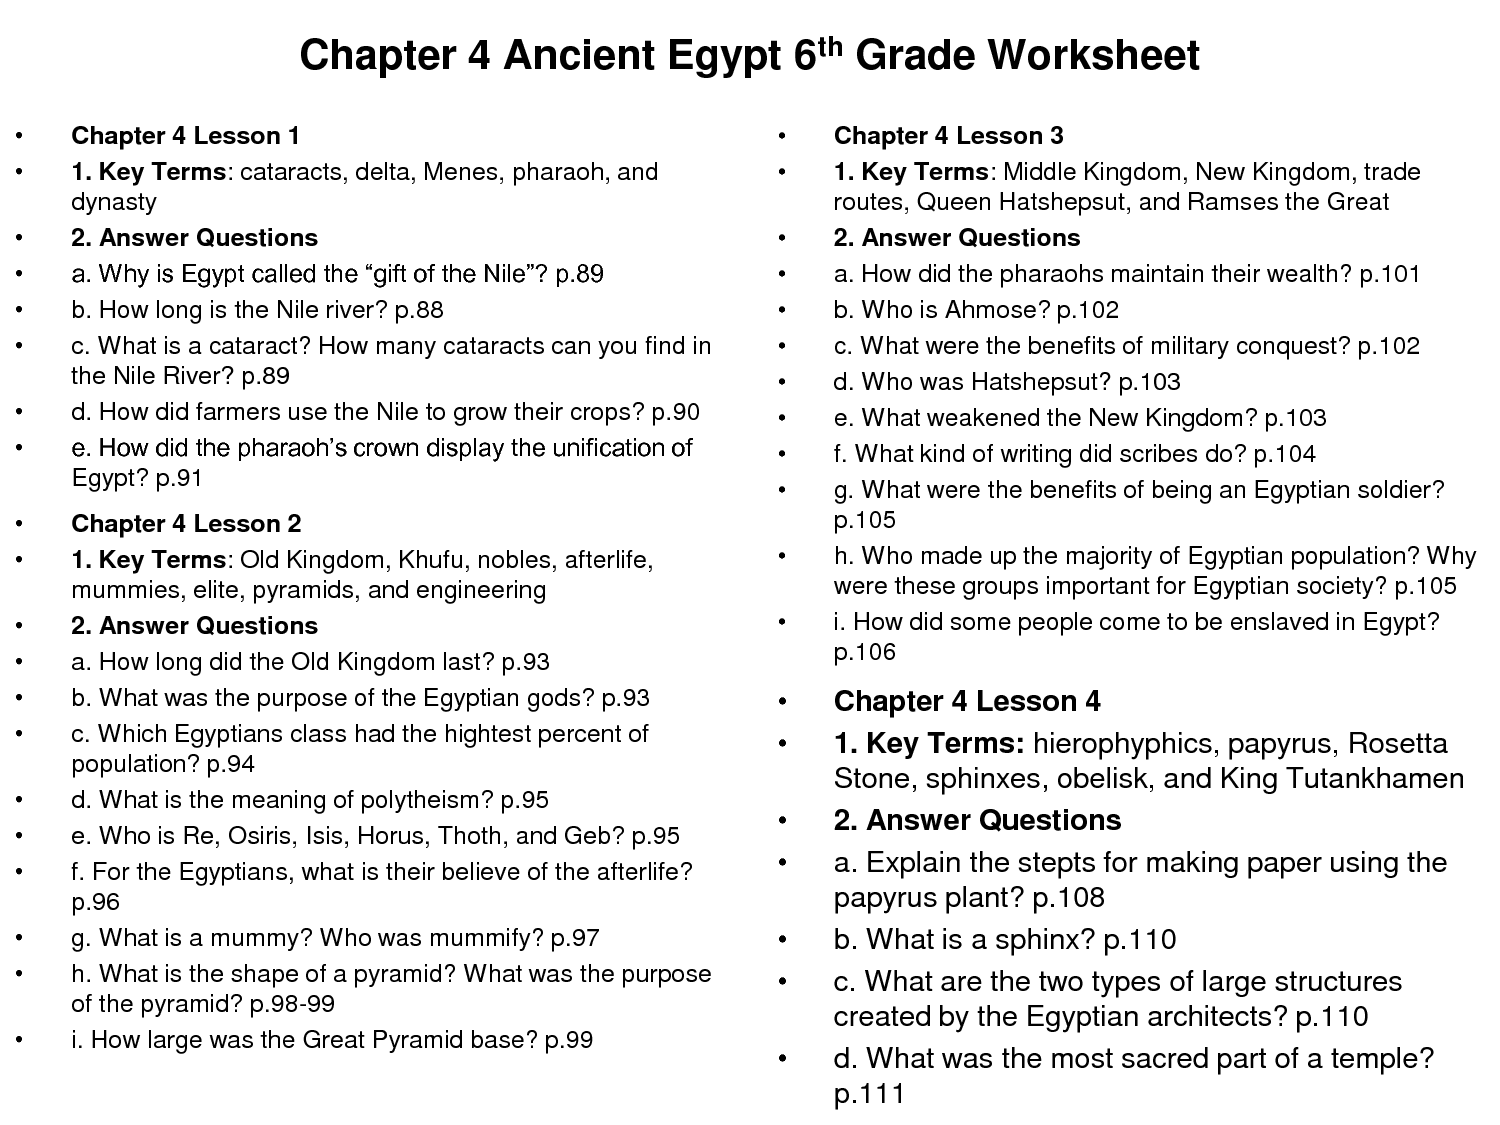 Ancient Egypt 6th Grade Social Studies Worksheets Image